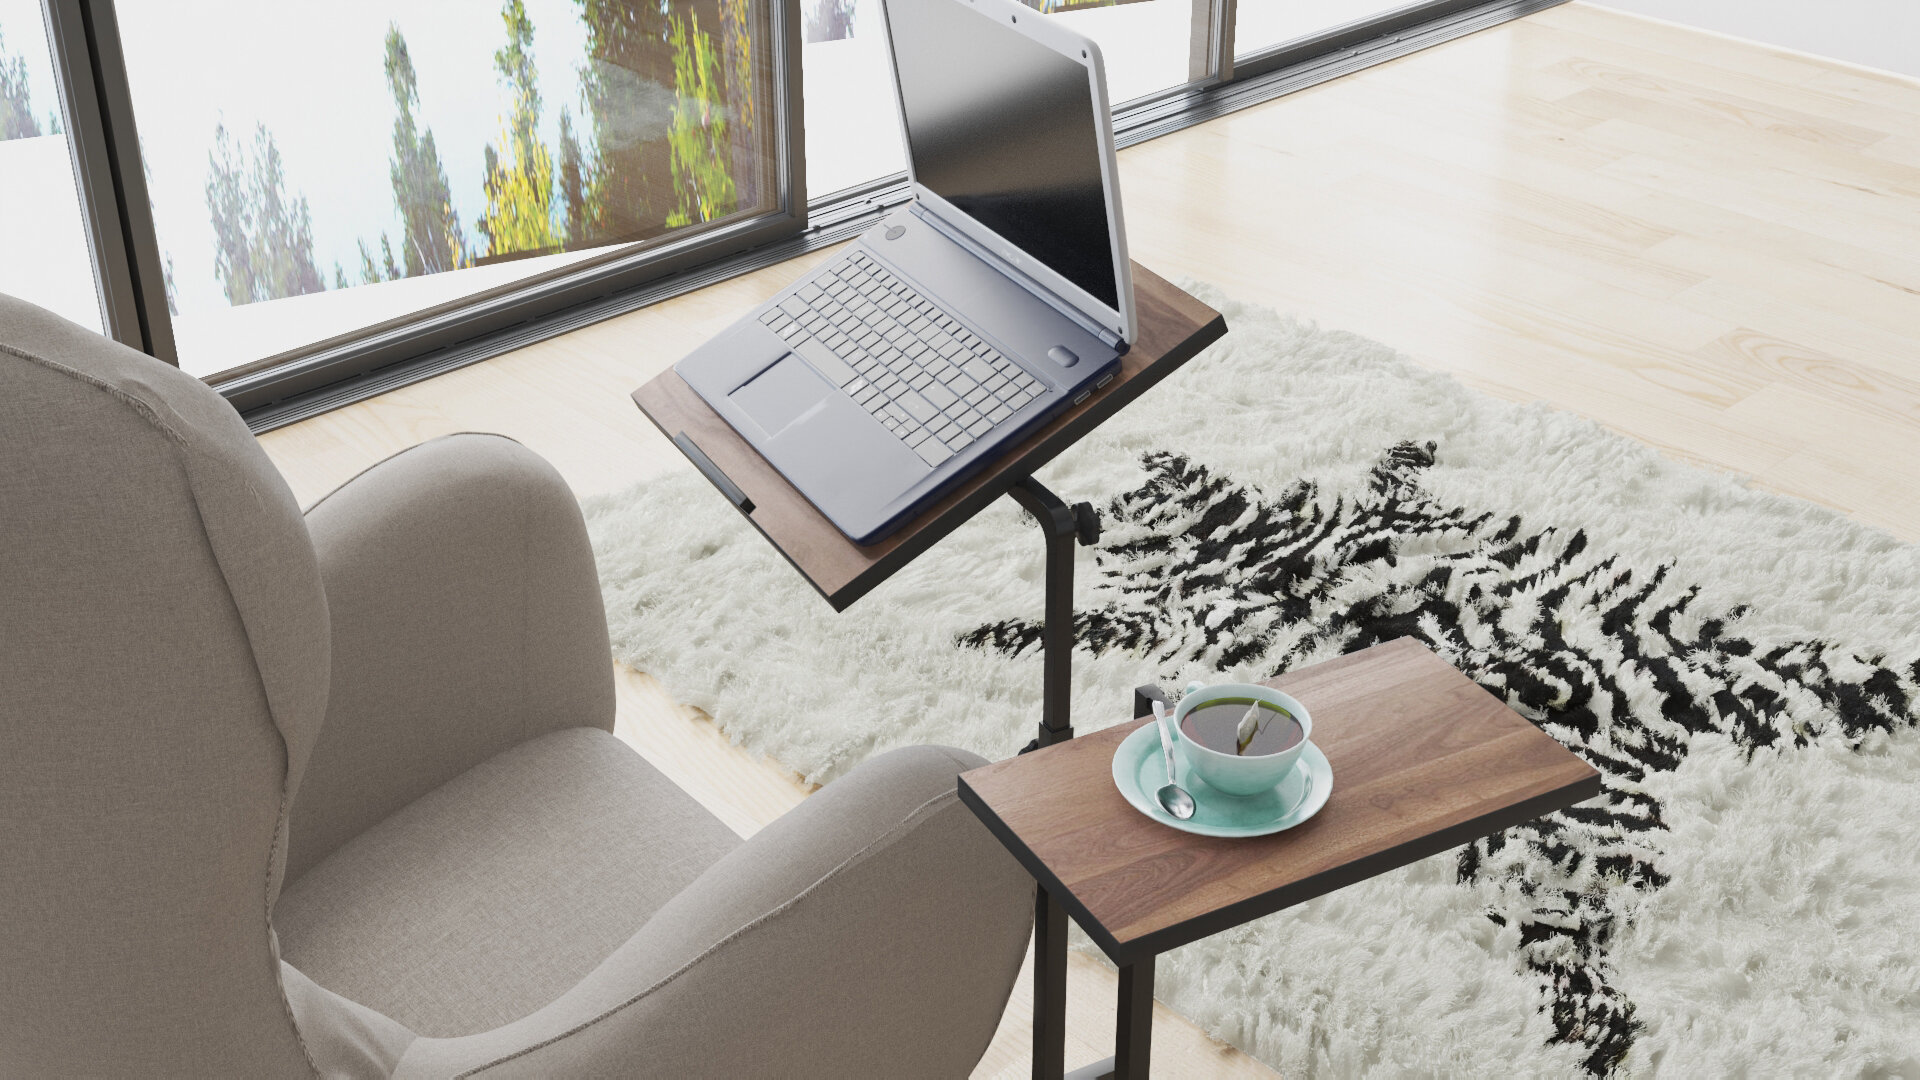 Стол для ноутбука Lale Ayarlanabilir Laptop Masasi